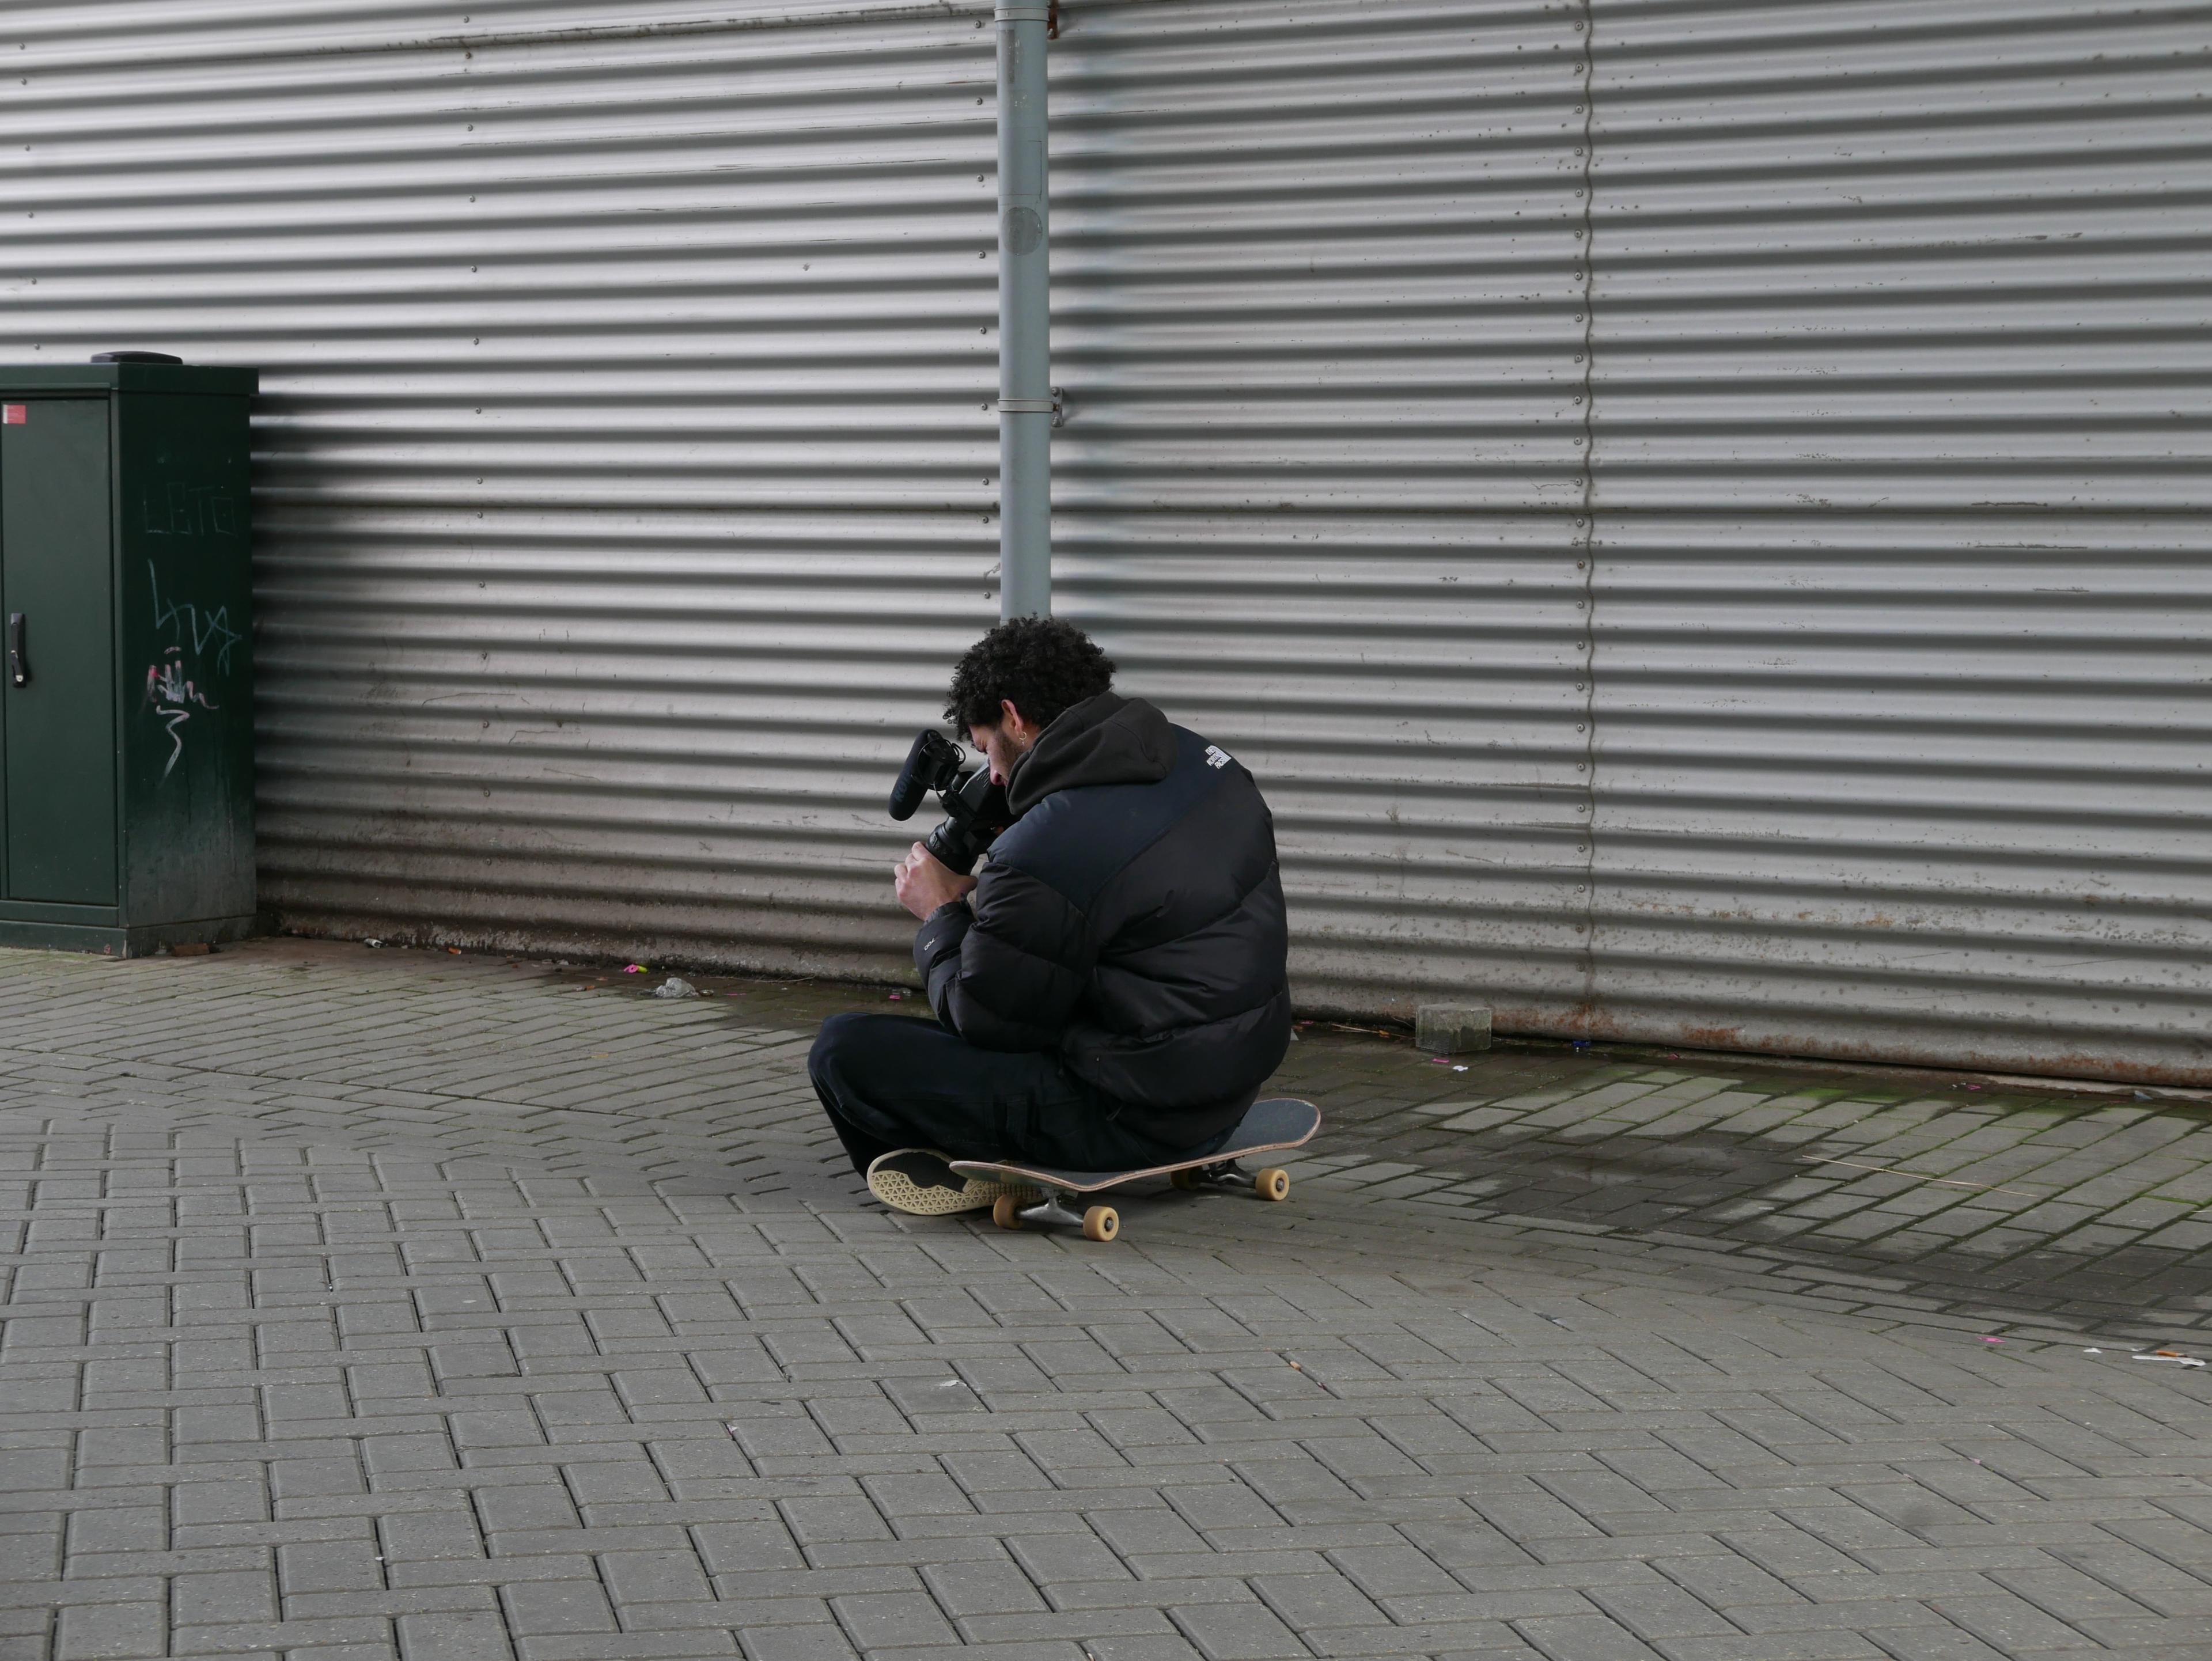 Filming Skateboarding: An Interview With Alex van Zwietering And Dylan van der Laan thumbnail